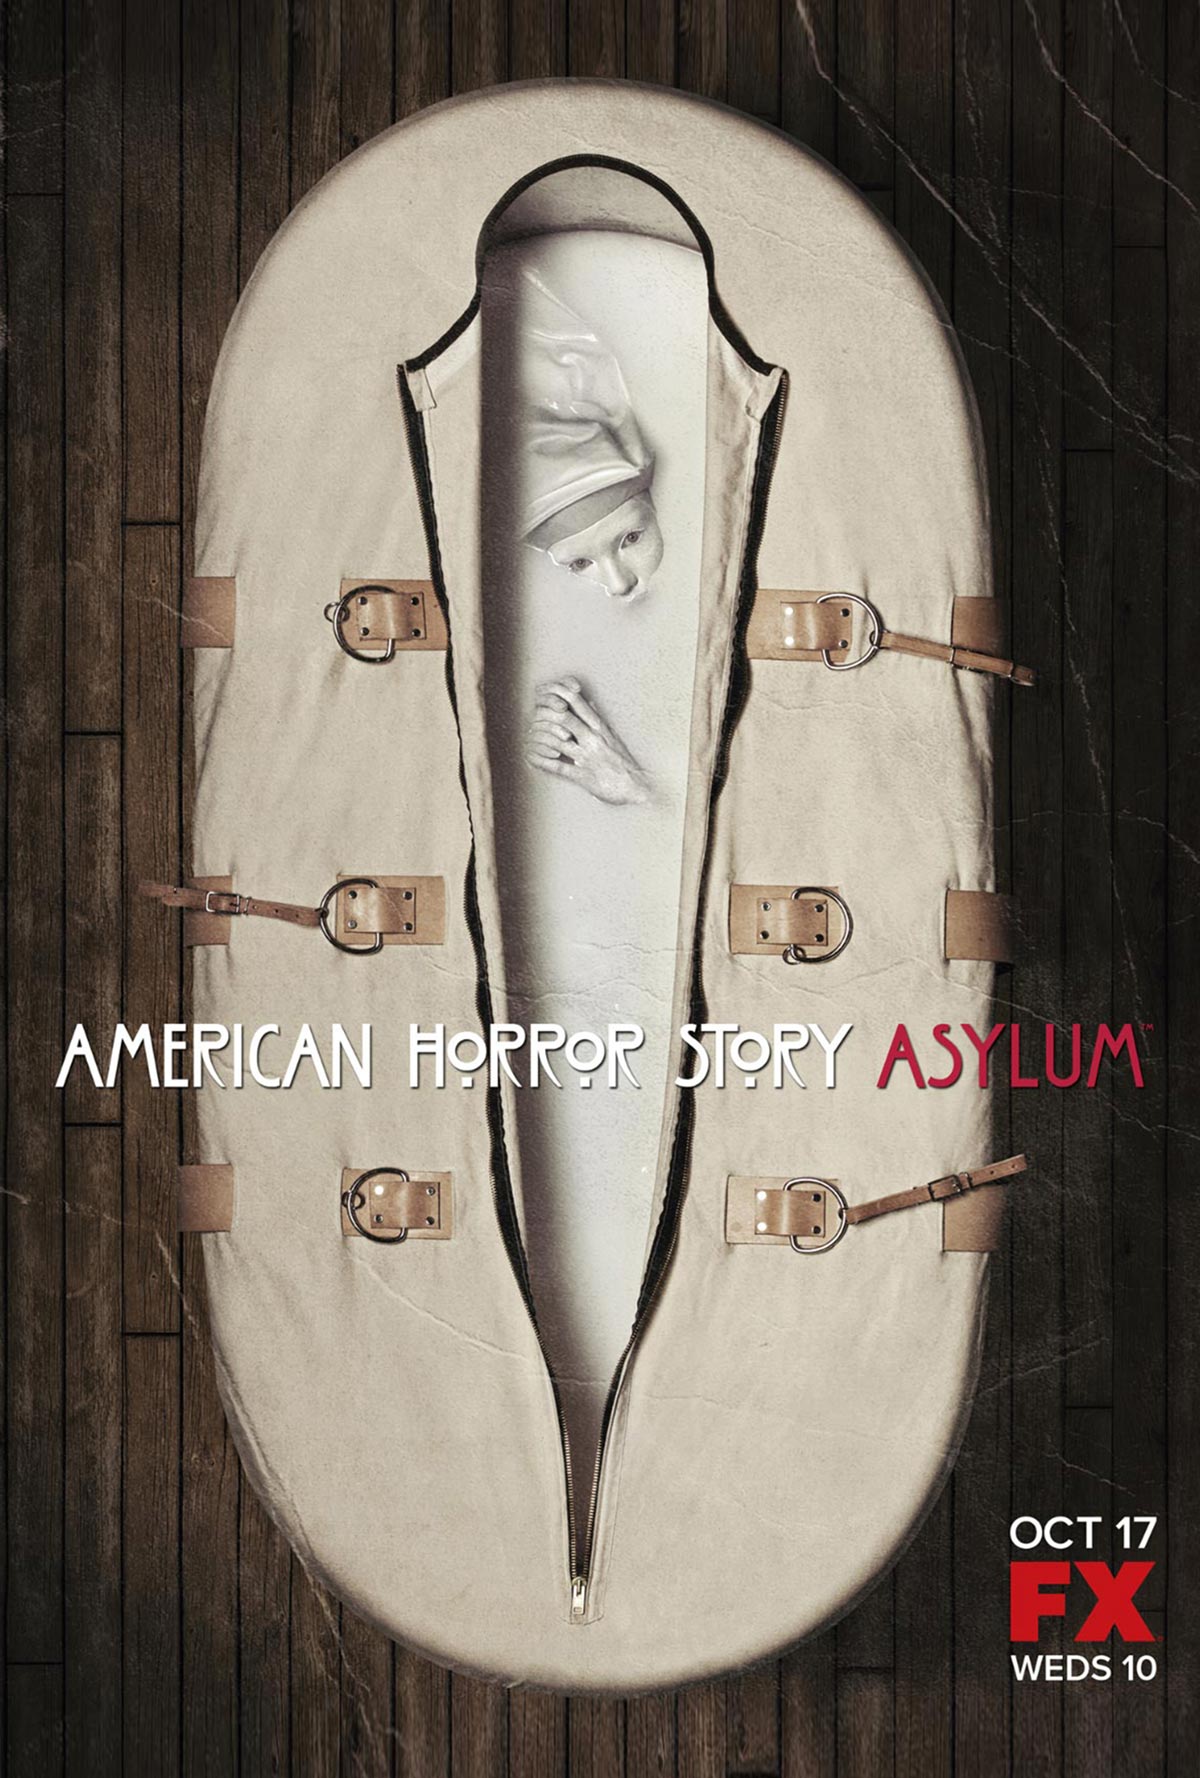 012_dreamogram-iconisus-key-art-movie-poster-american-horror-story-asylum-2_vertical-cover